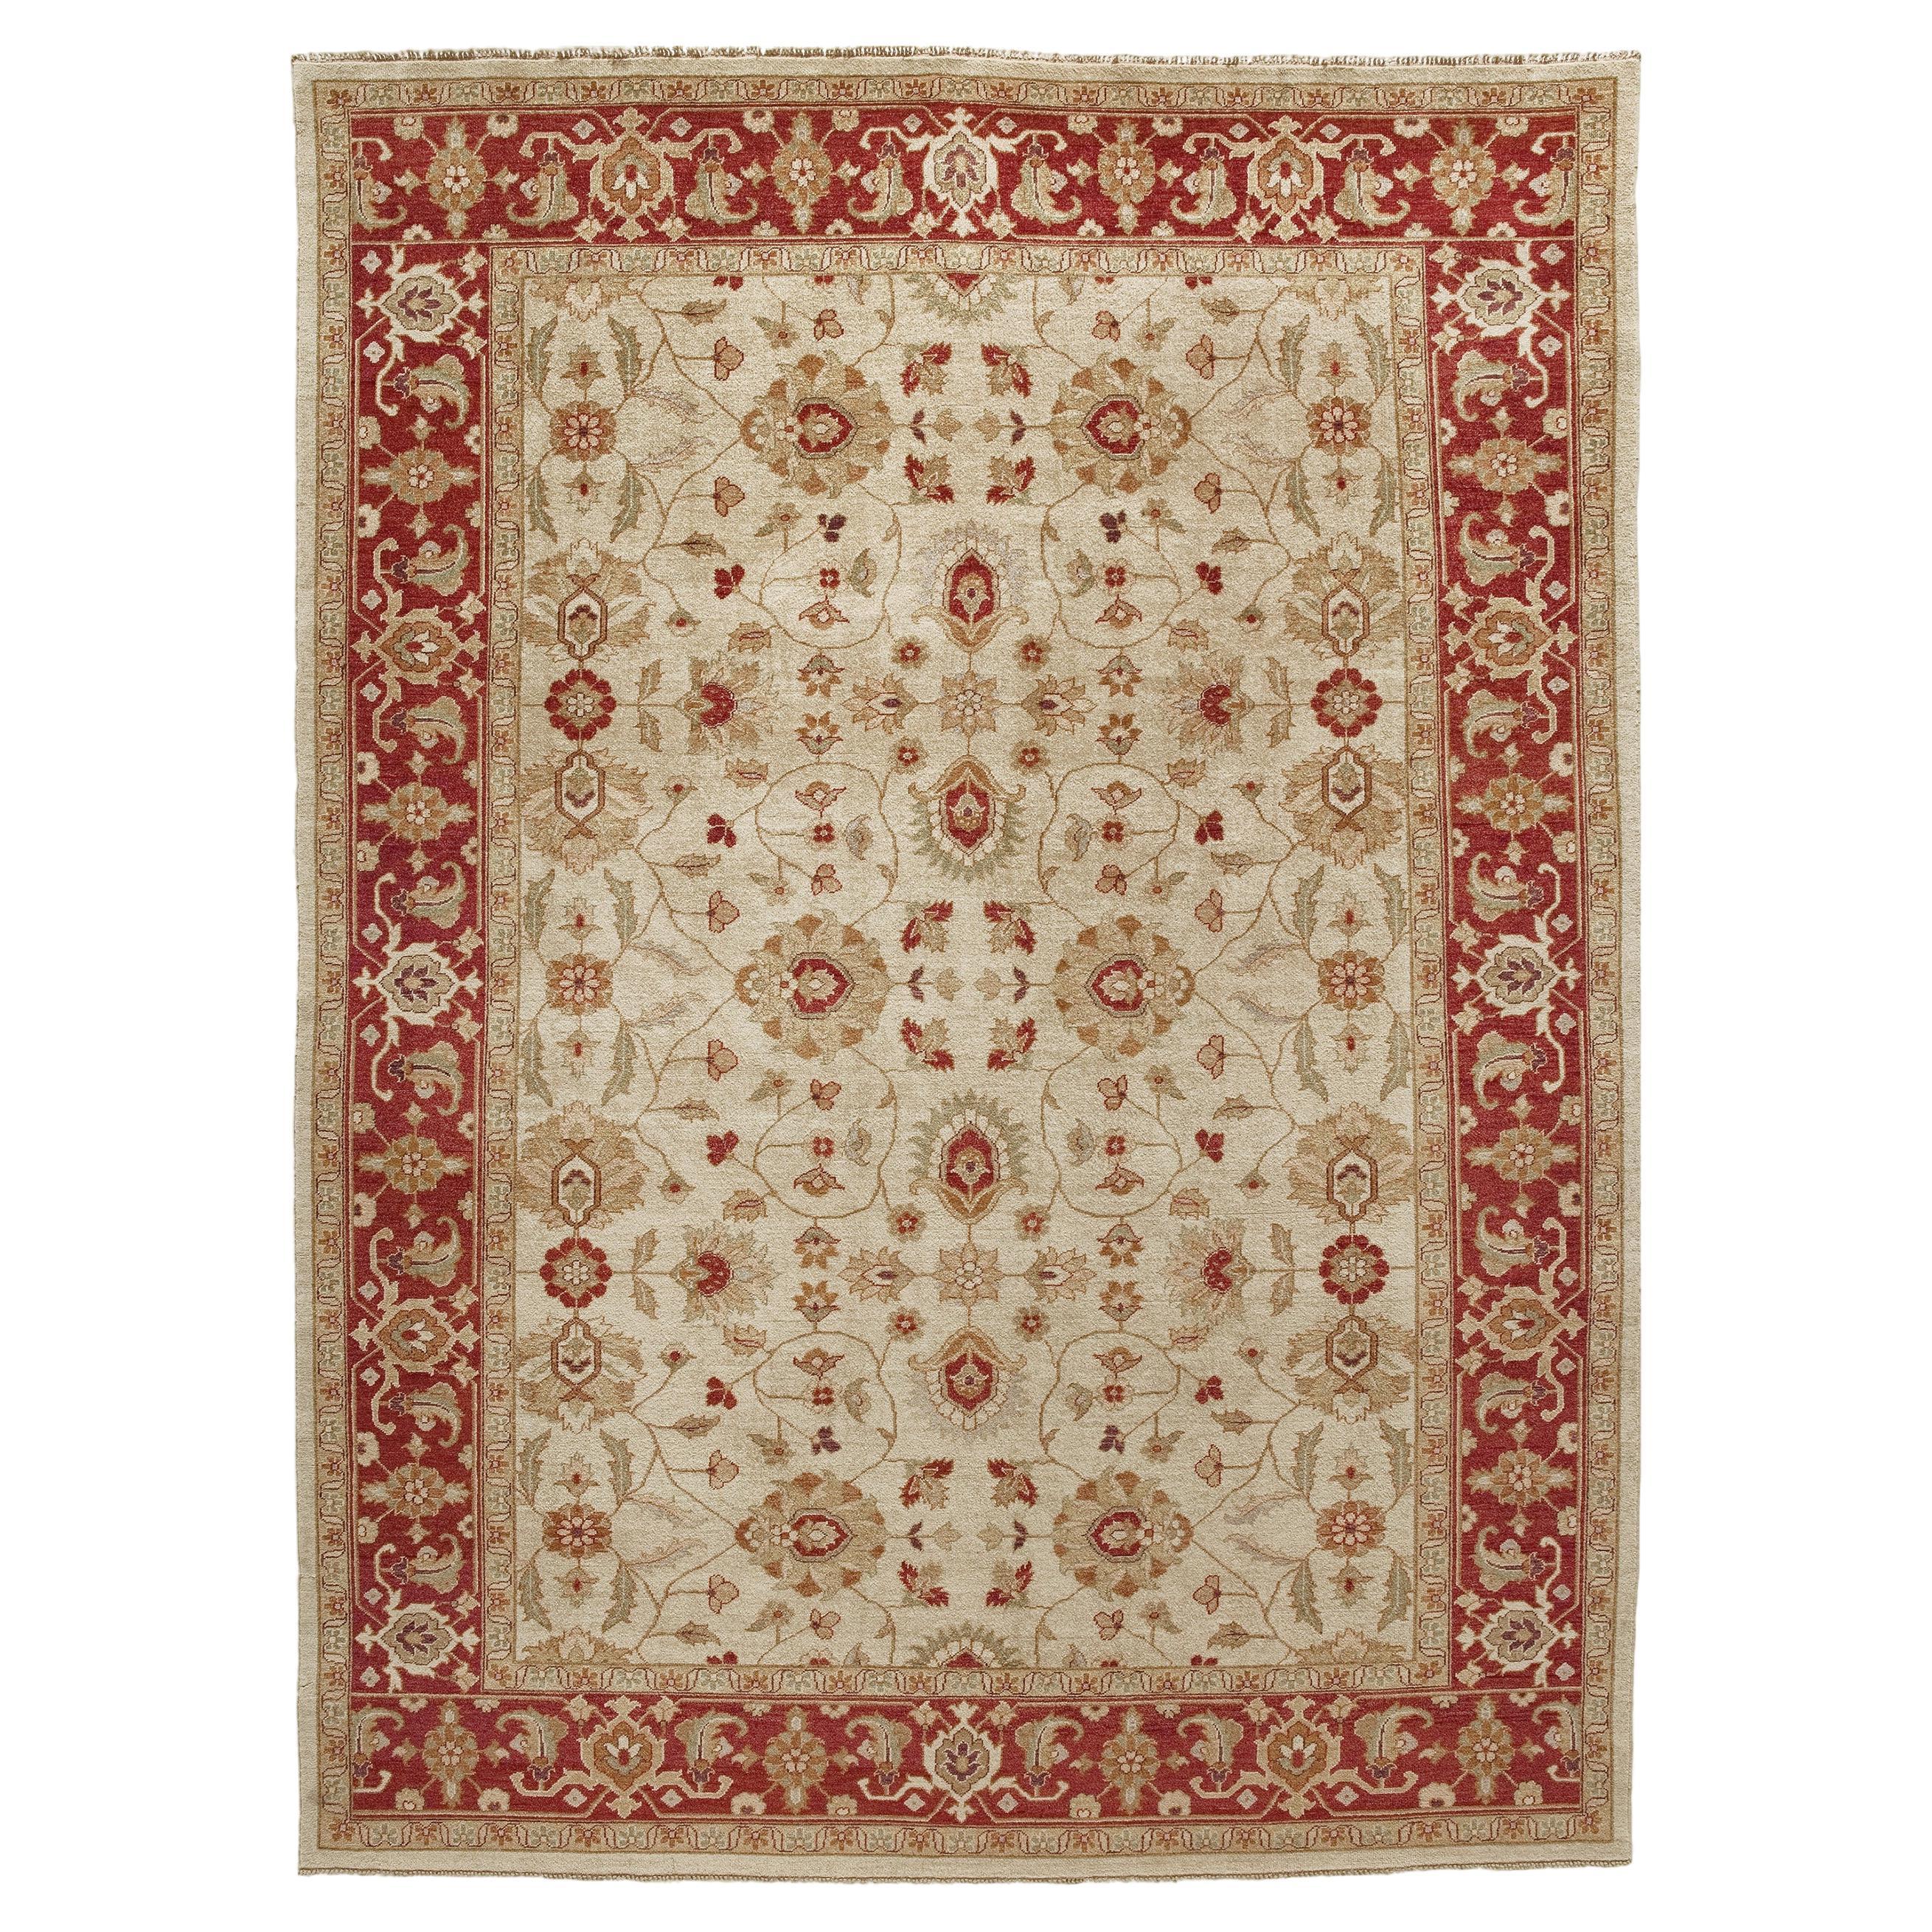 Traditioneller handgeknüpfter Lilihan-Teppich in Creme und Rot in Luxury 11x18, Traditional